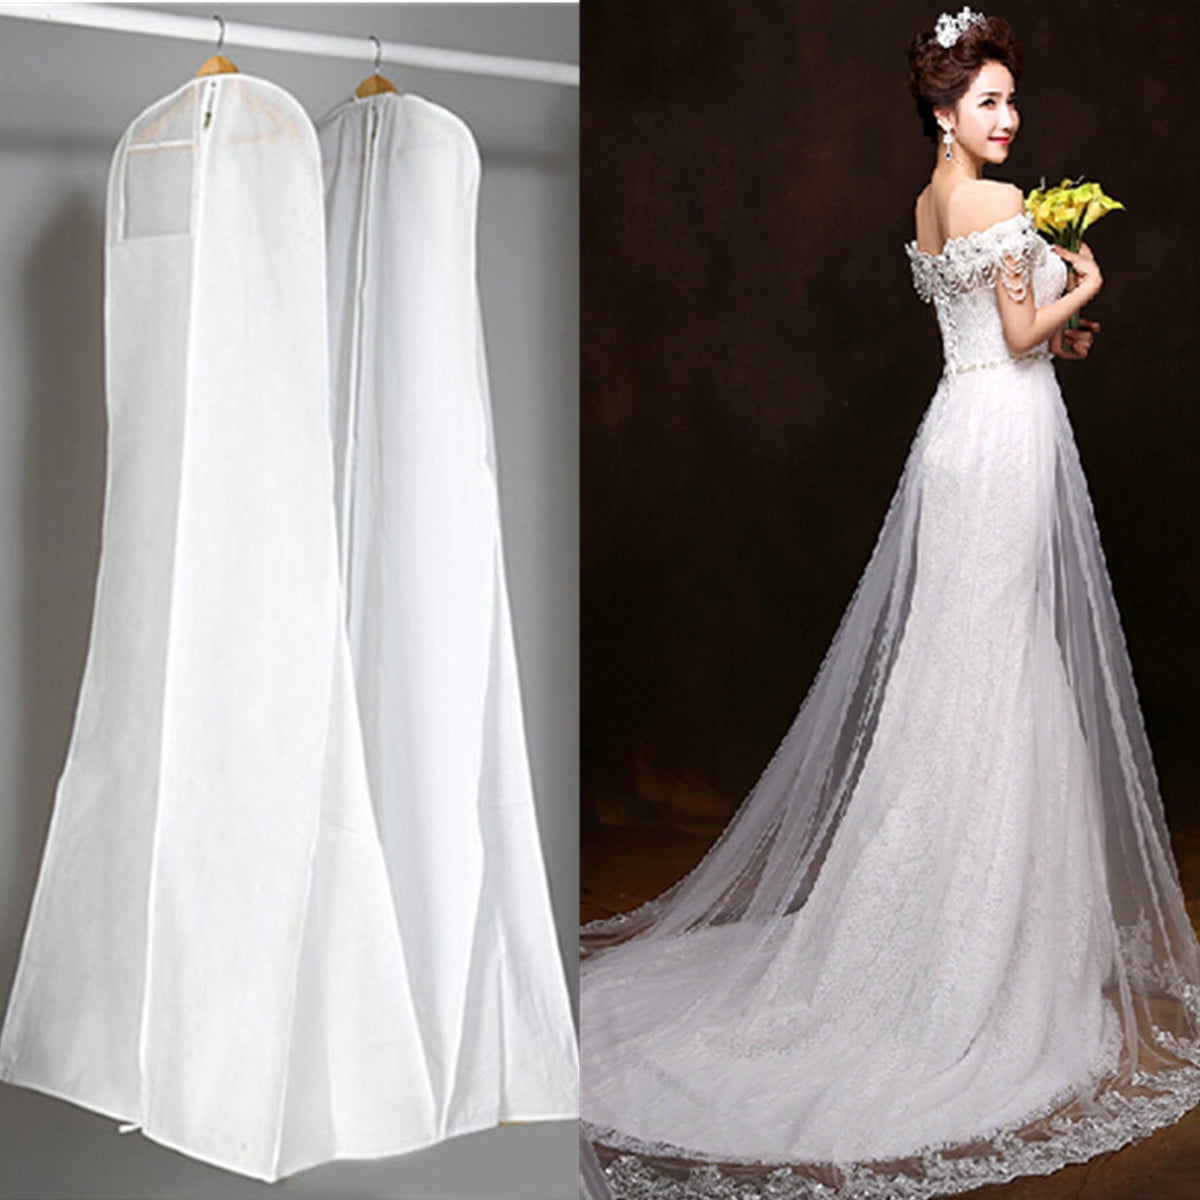 Hoesh 72" Bridal Wedding Dress Carry Cover Wooden Bar Support Garment Dress Bags 